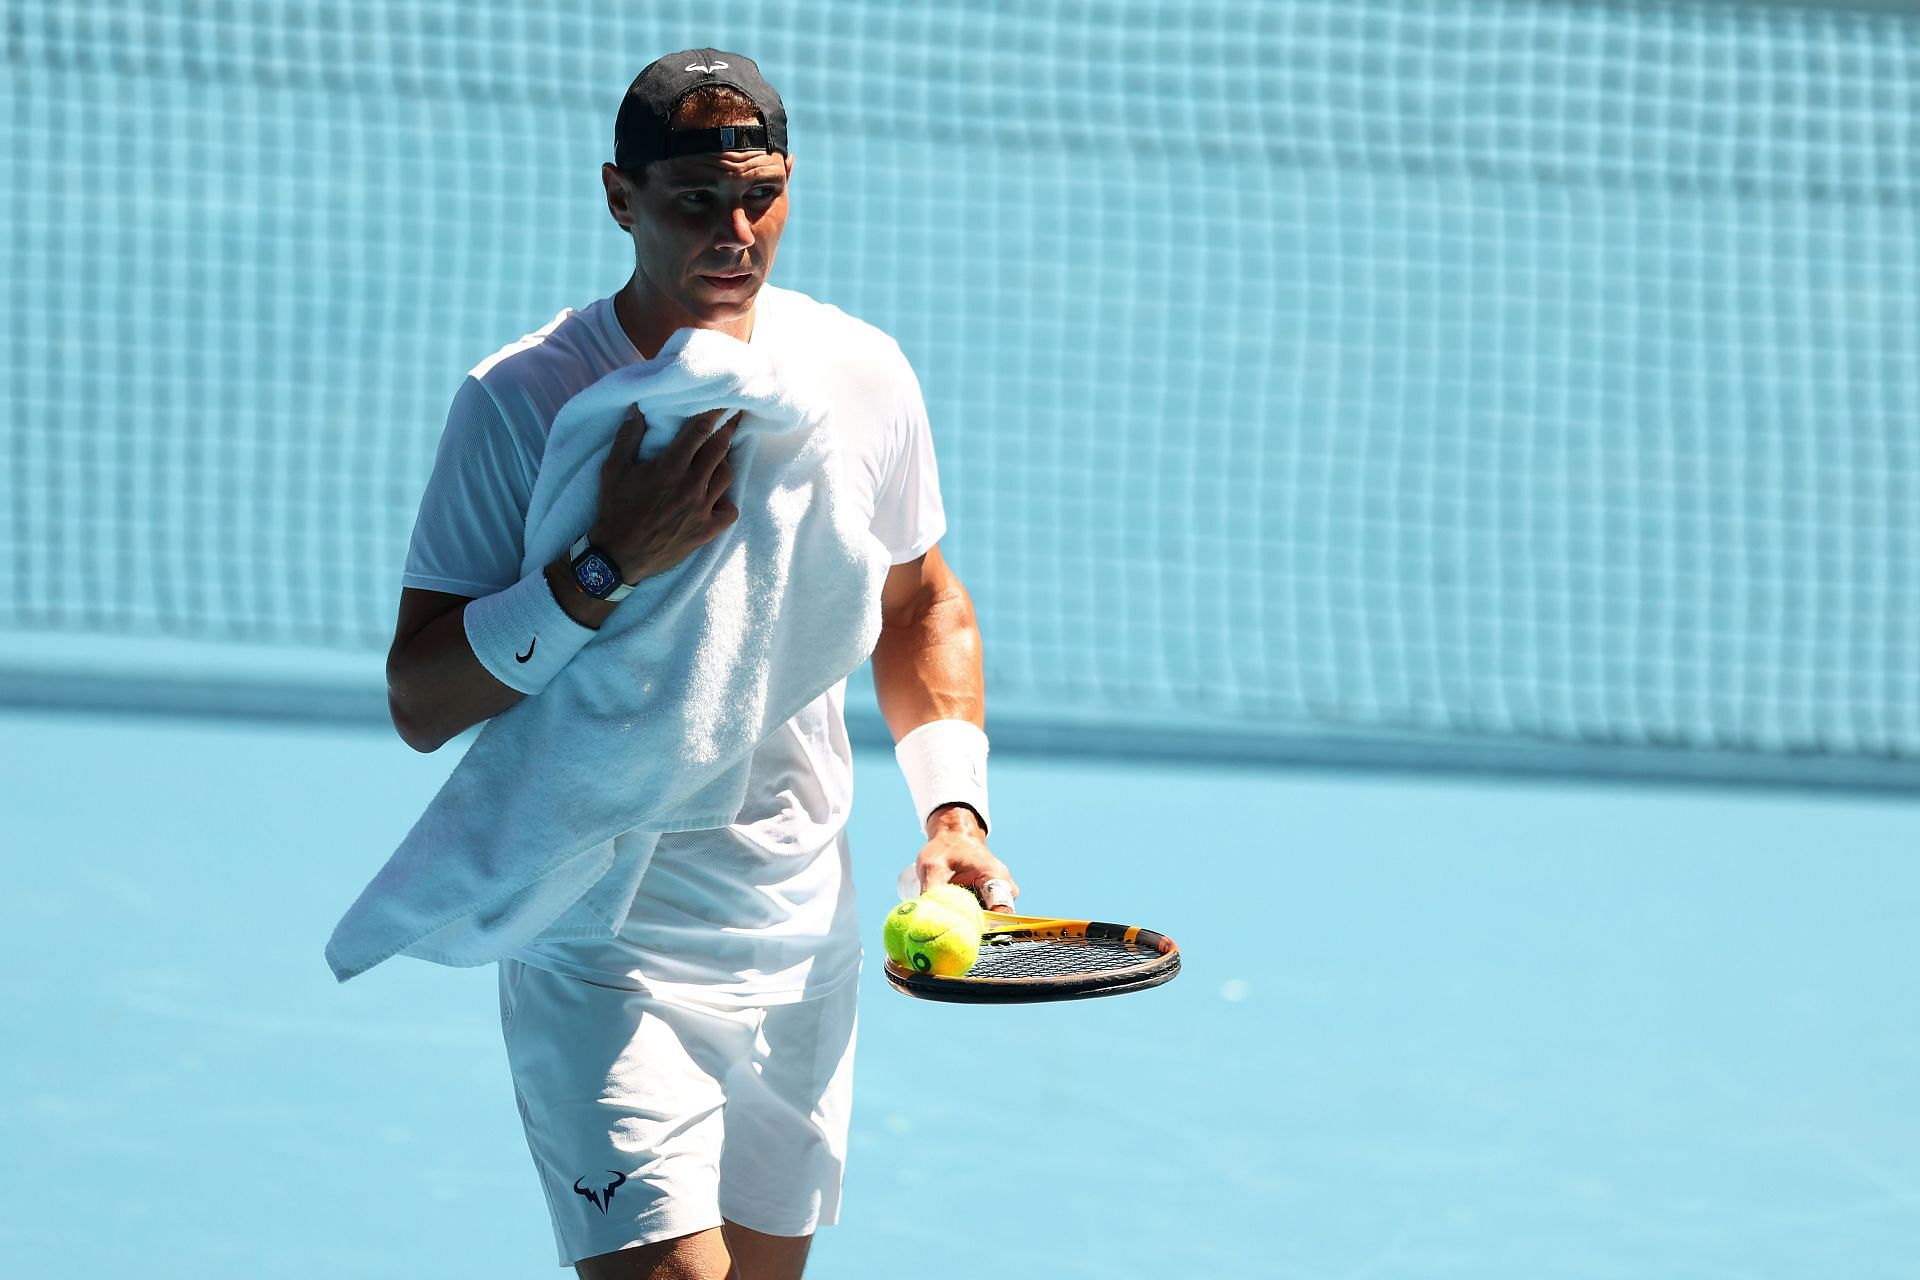 Rafael Nadal practices ahead of the 2023 Australian Open.